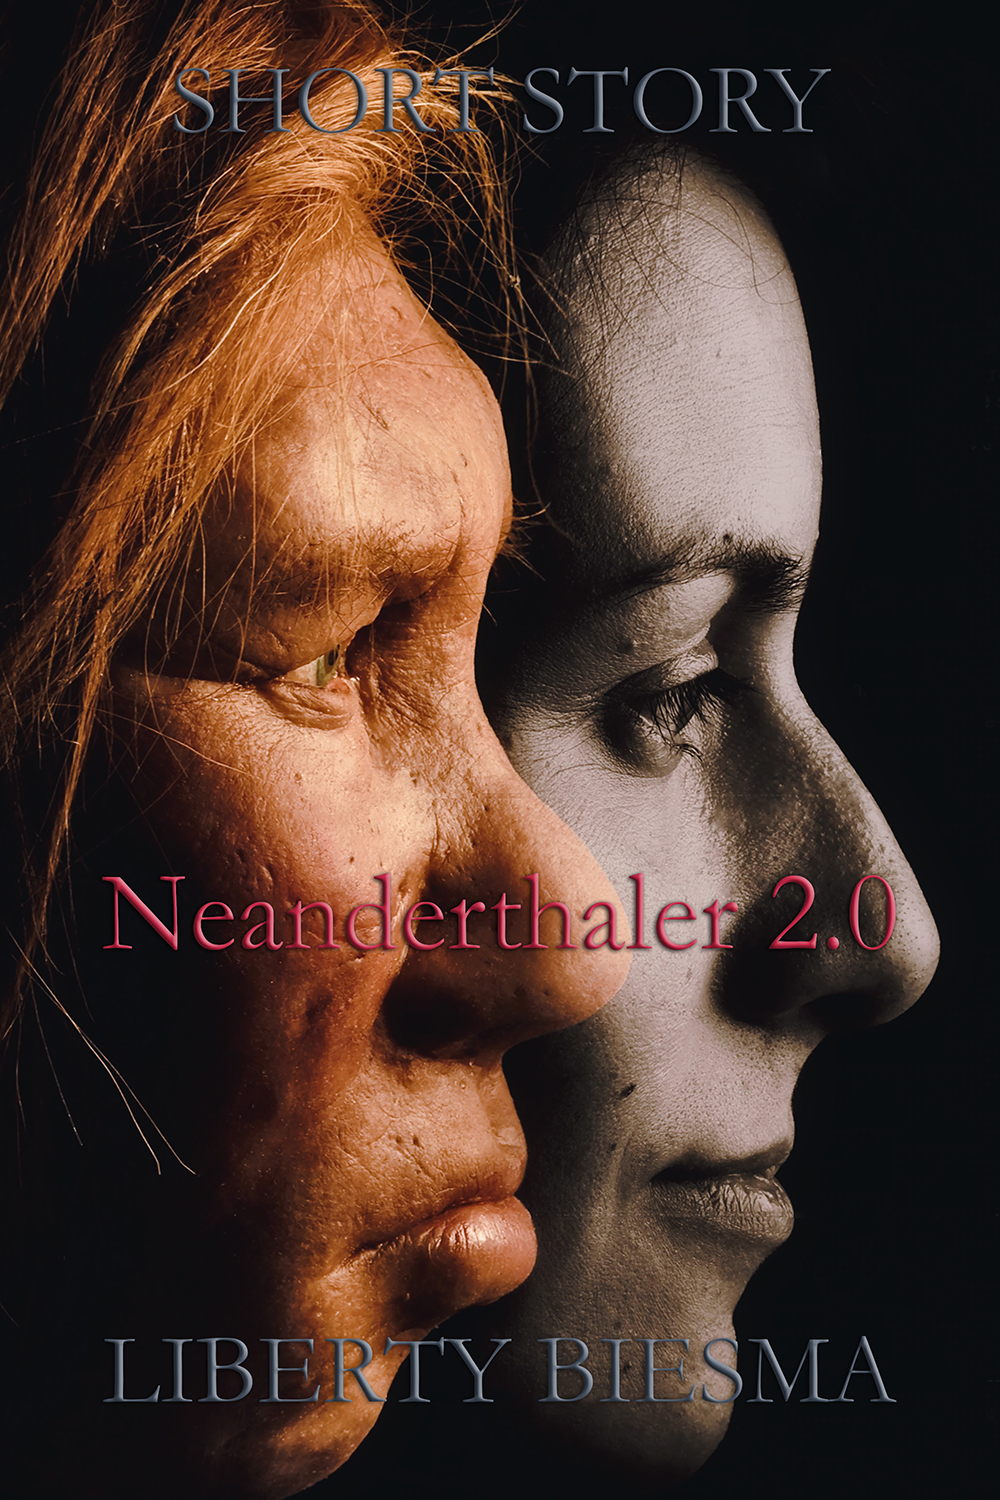 Neanderthaler 2.0 - A short story by Liberty Biesma